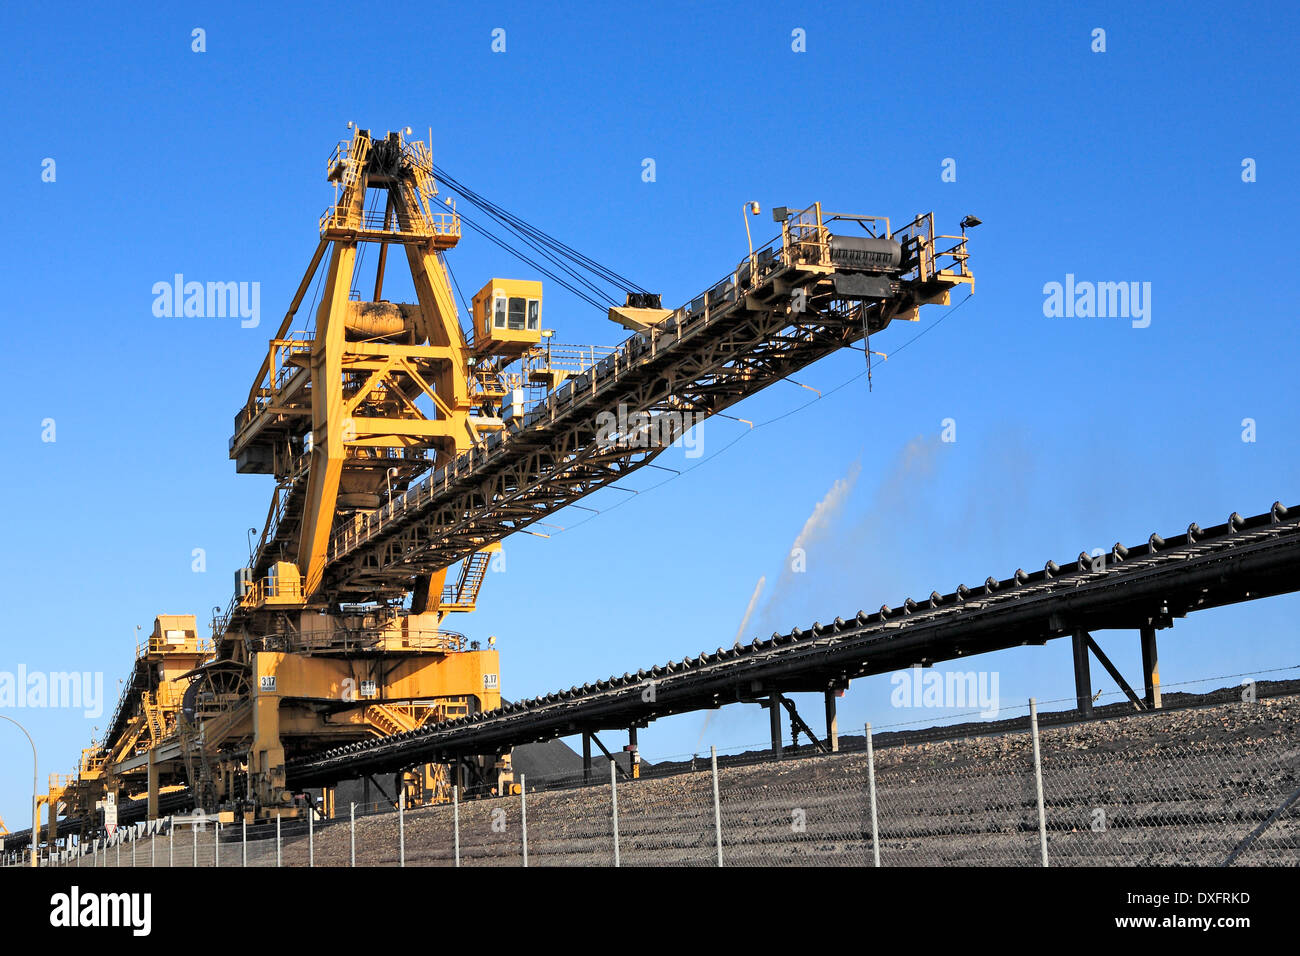 A Yellow Coal Loader Stock Photo